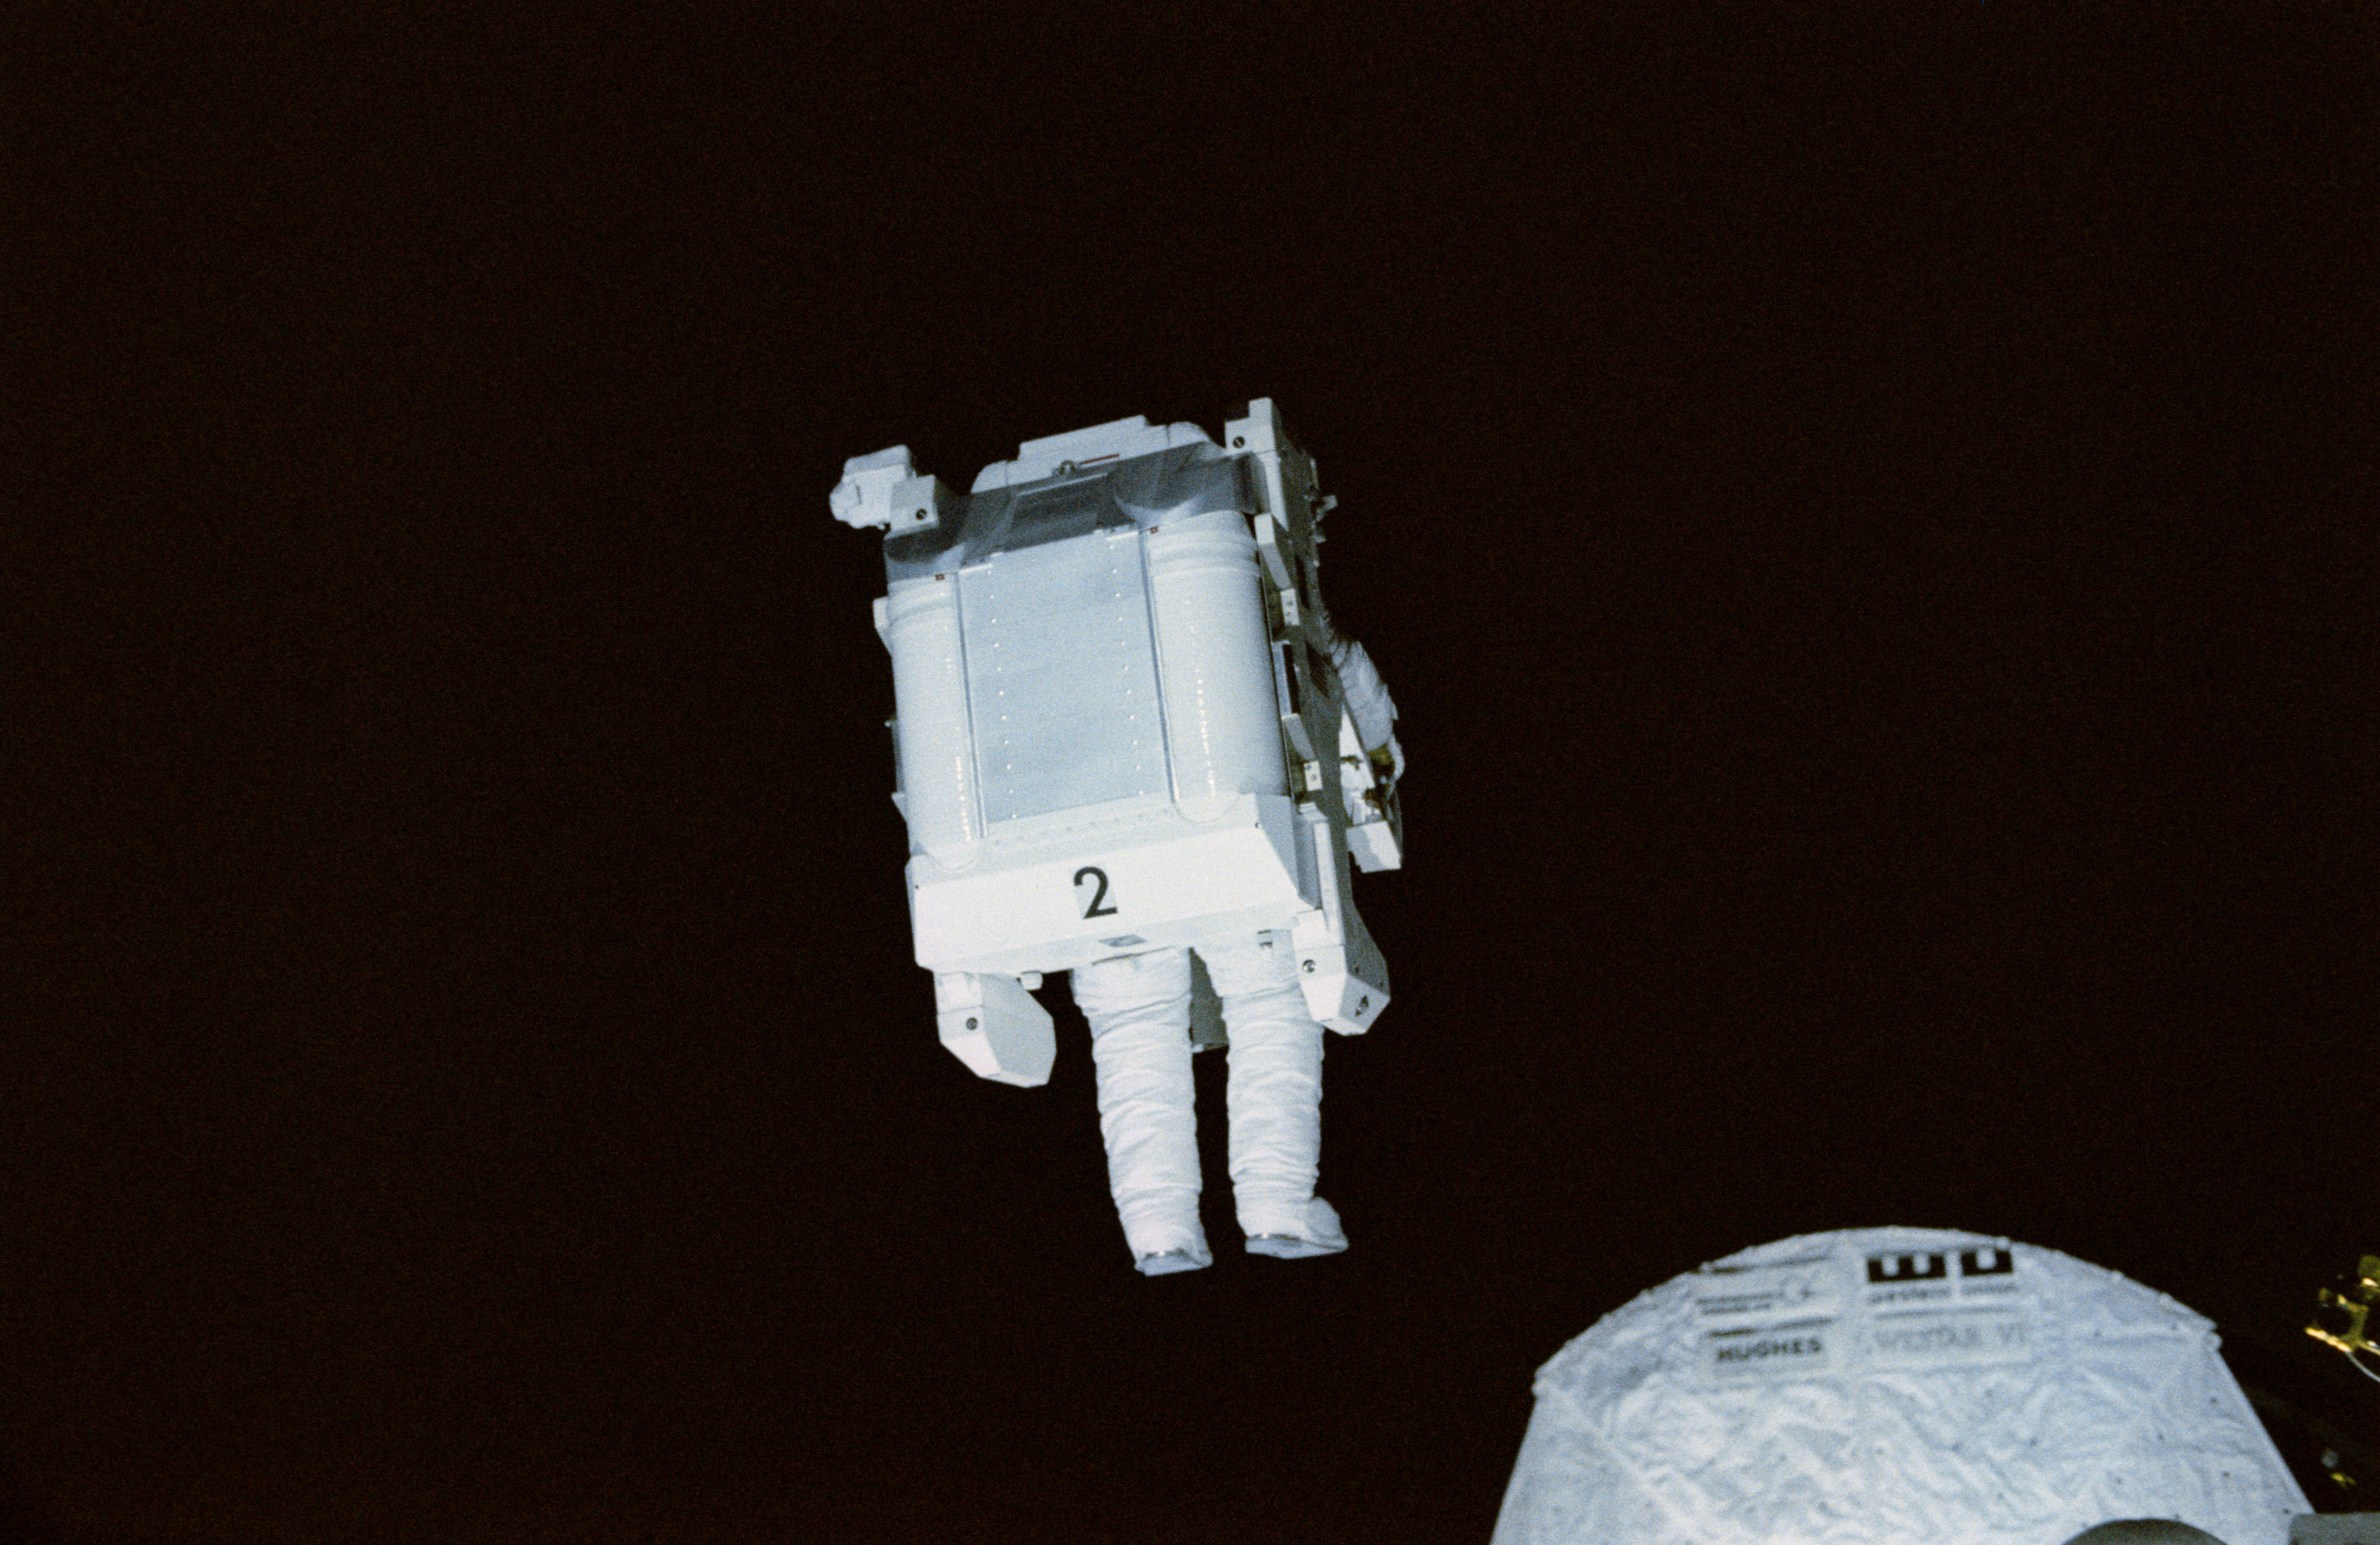 Robert L. Stewart flies the MMU above Challenger’s payload bay